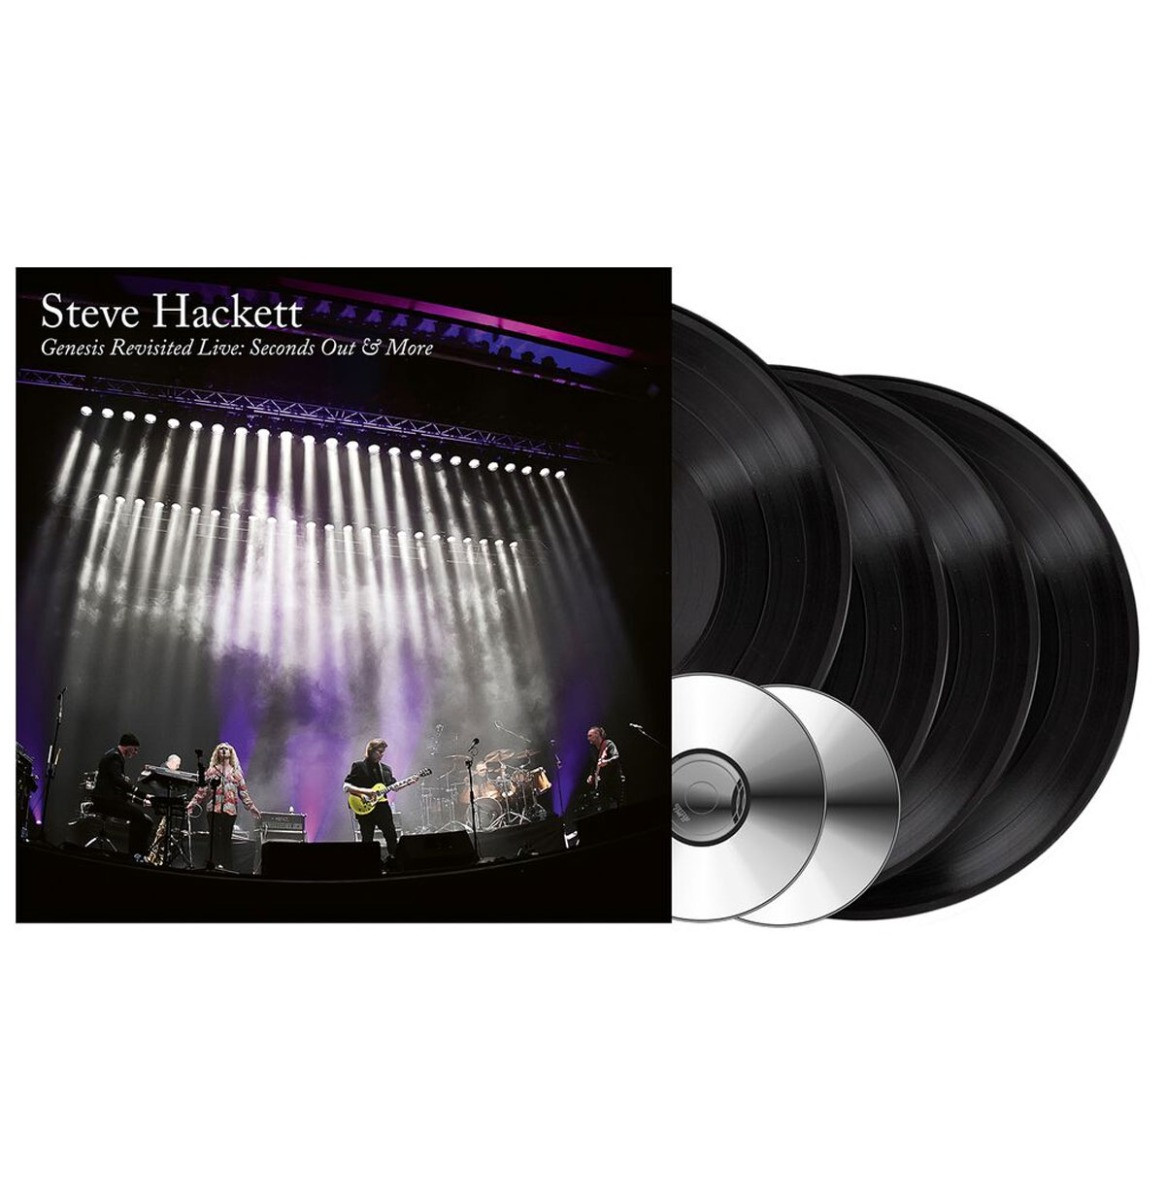 Steve Hackett - Genesis Revisited Live: Seconds Out & More 4-LP + 2-CD Set